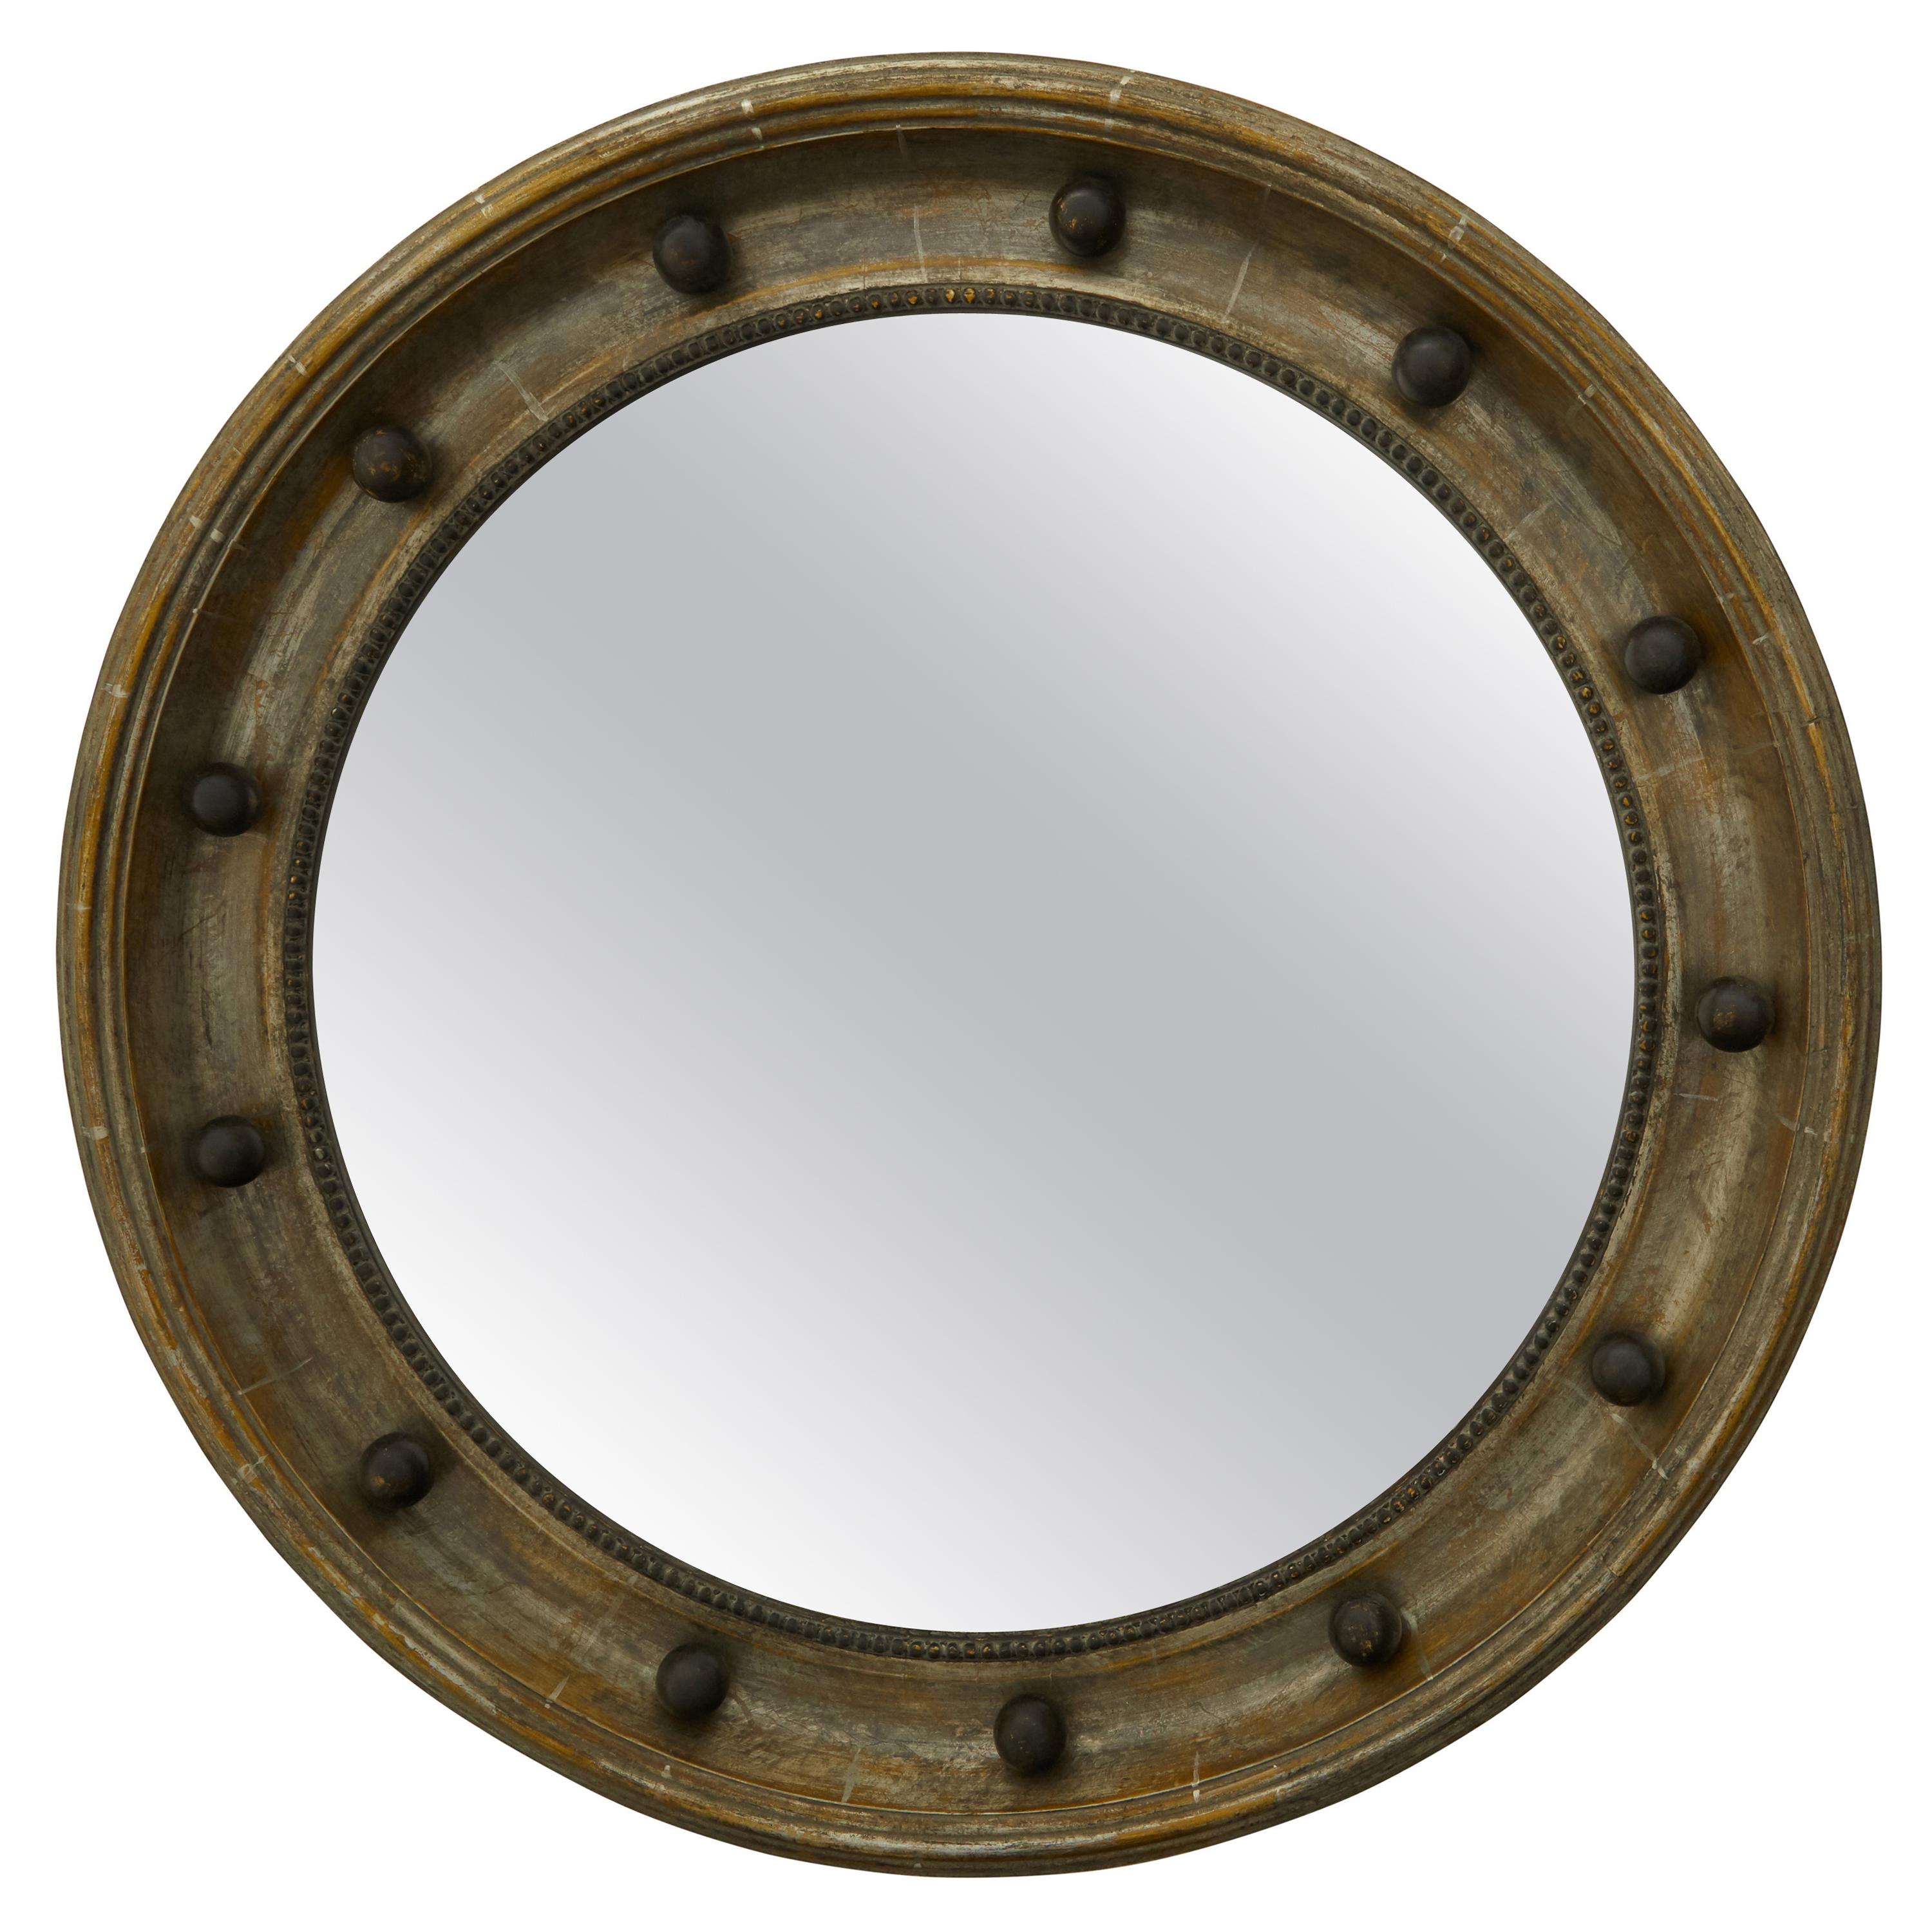 English 1900s Silver Leaf Beaded Convex Bullseye Mirror with Ebonized Accents